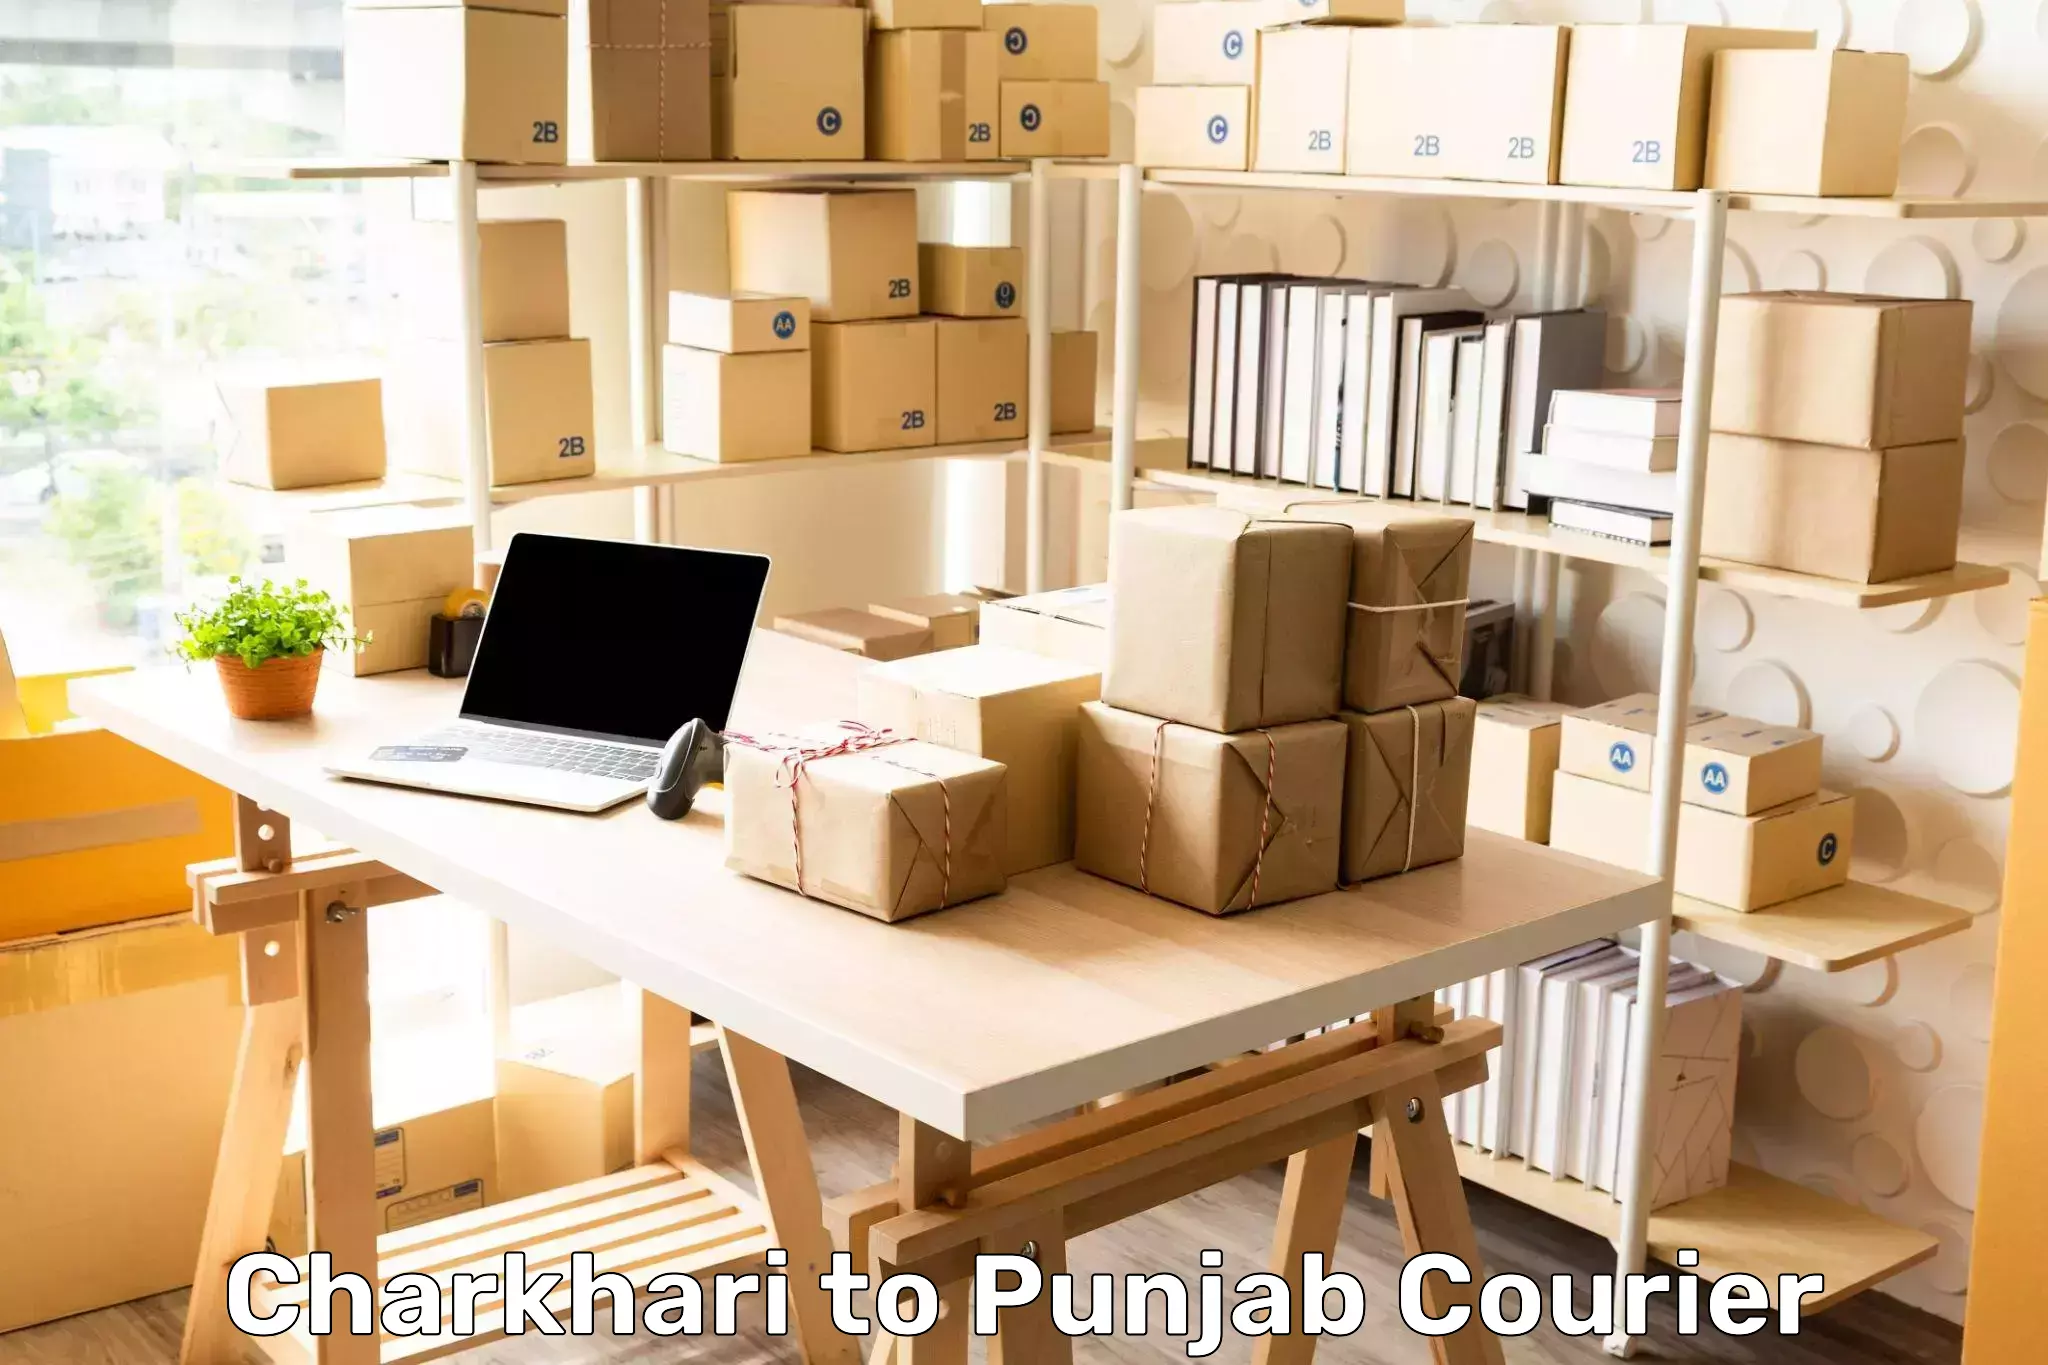 Quick booking process Charkhari to Punjab